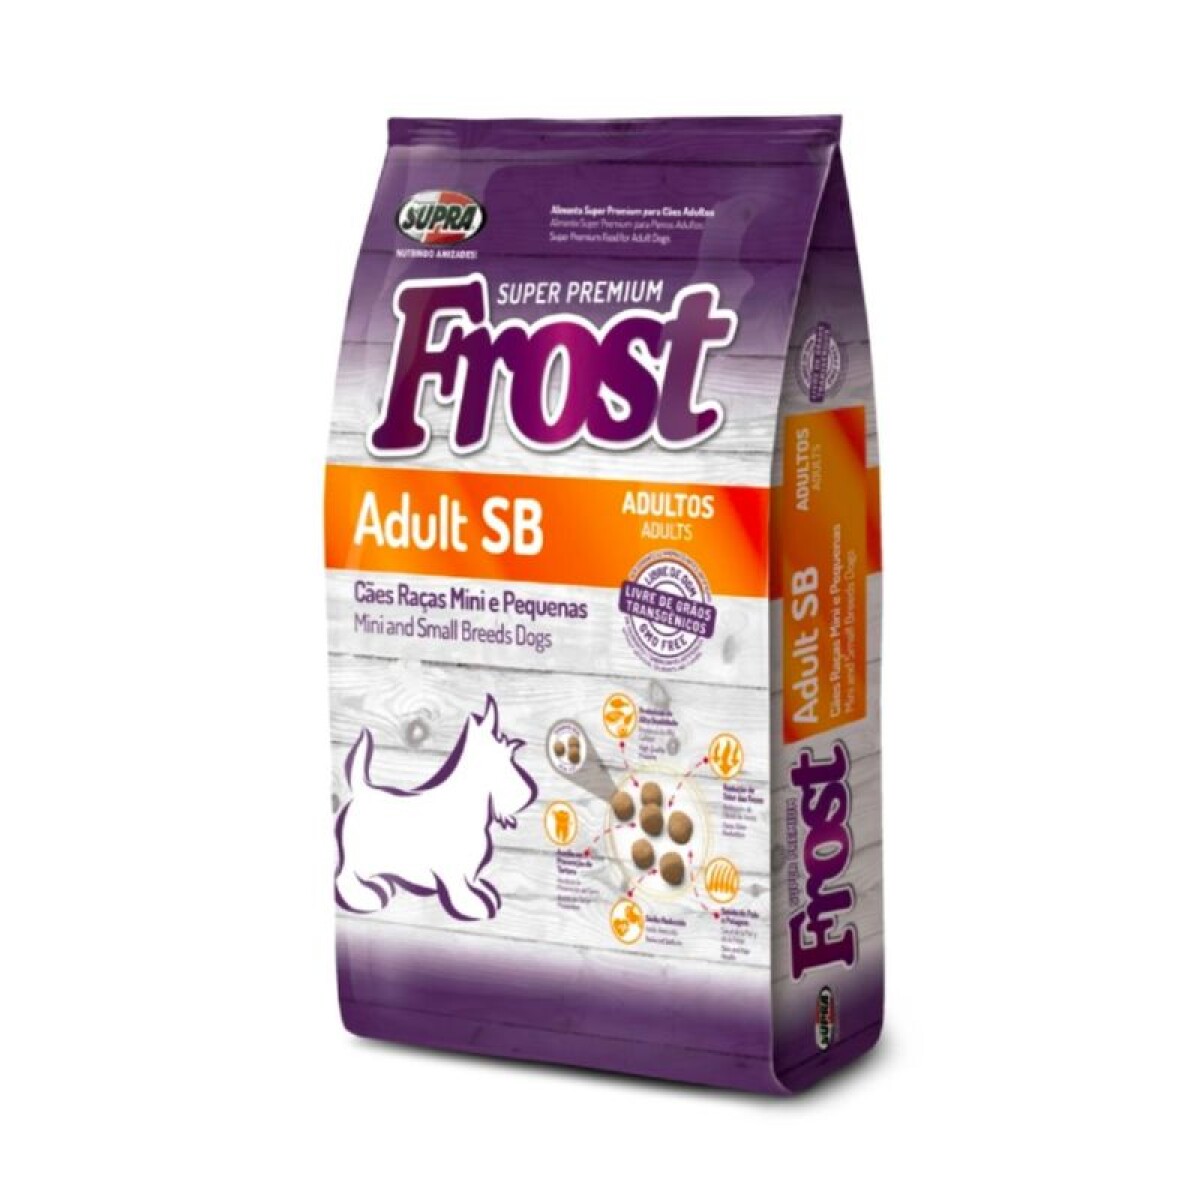 FROST ADULT SB 2.5KG - Frost Adult Sb 2.5kg 